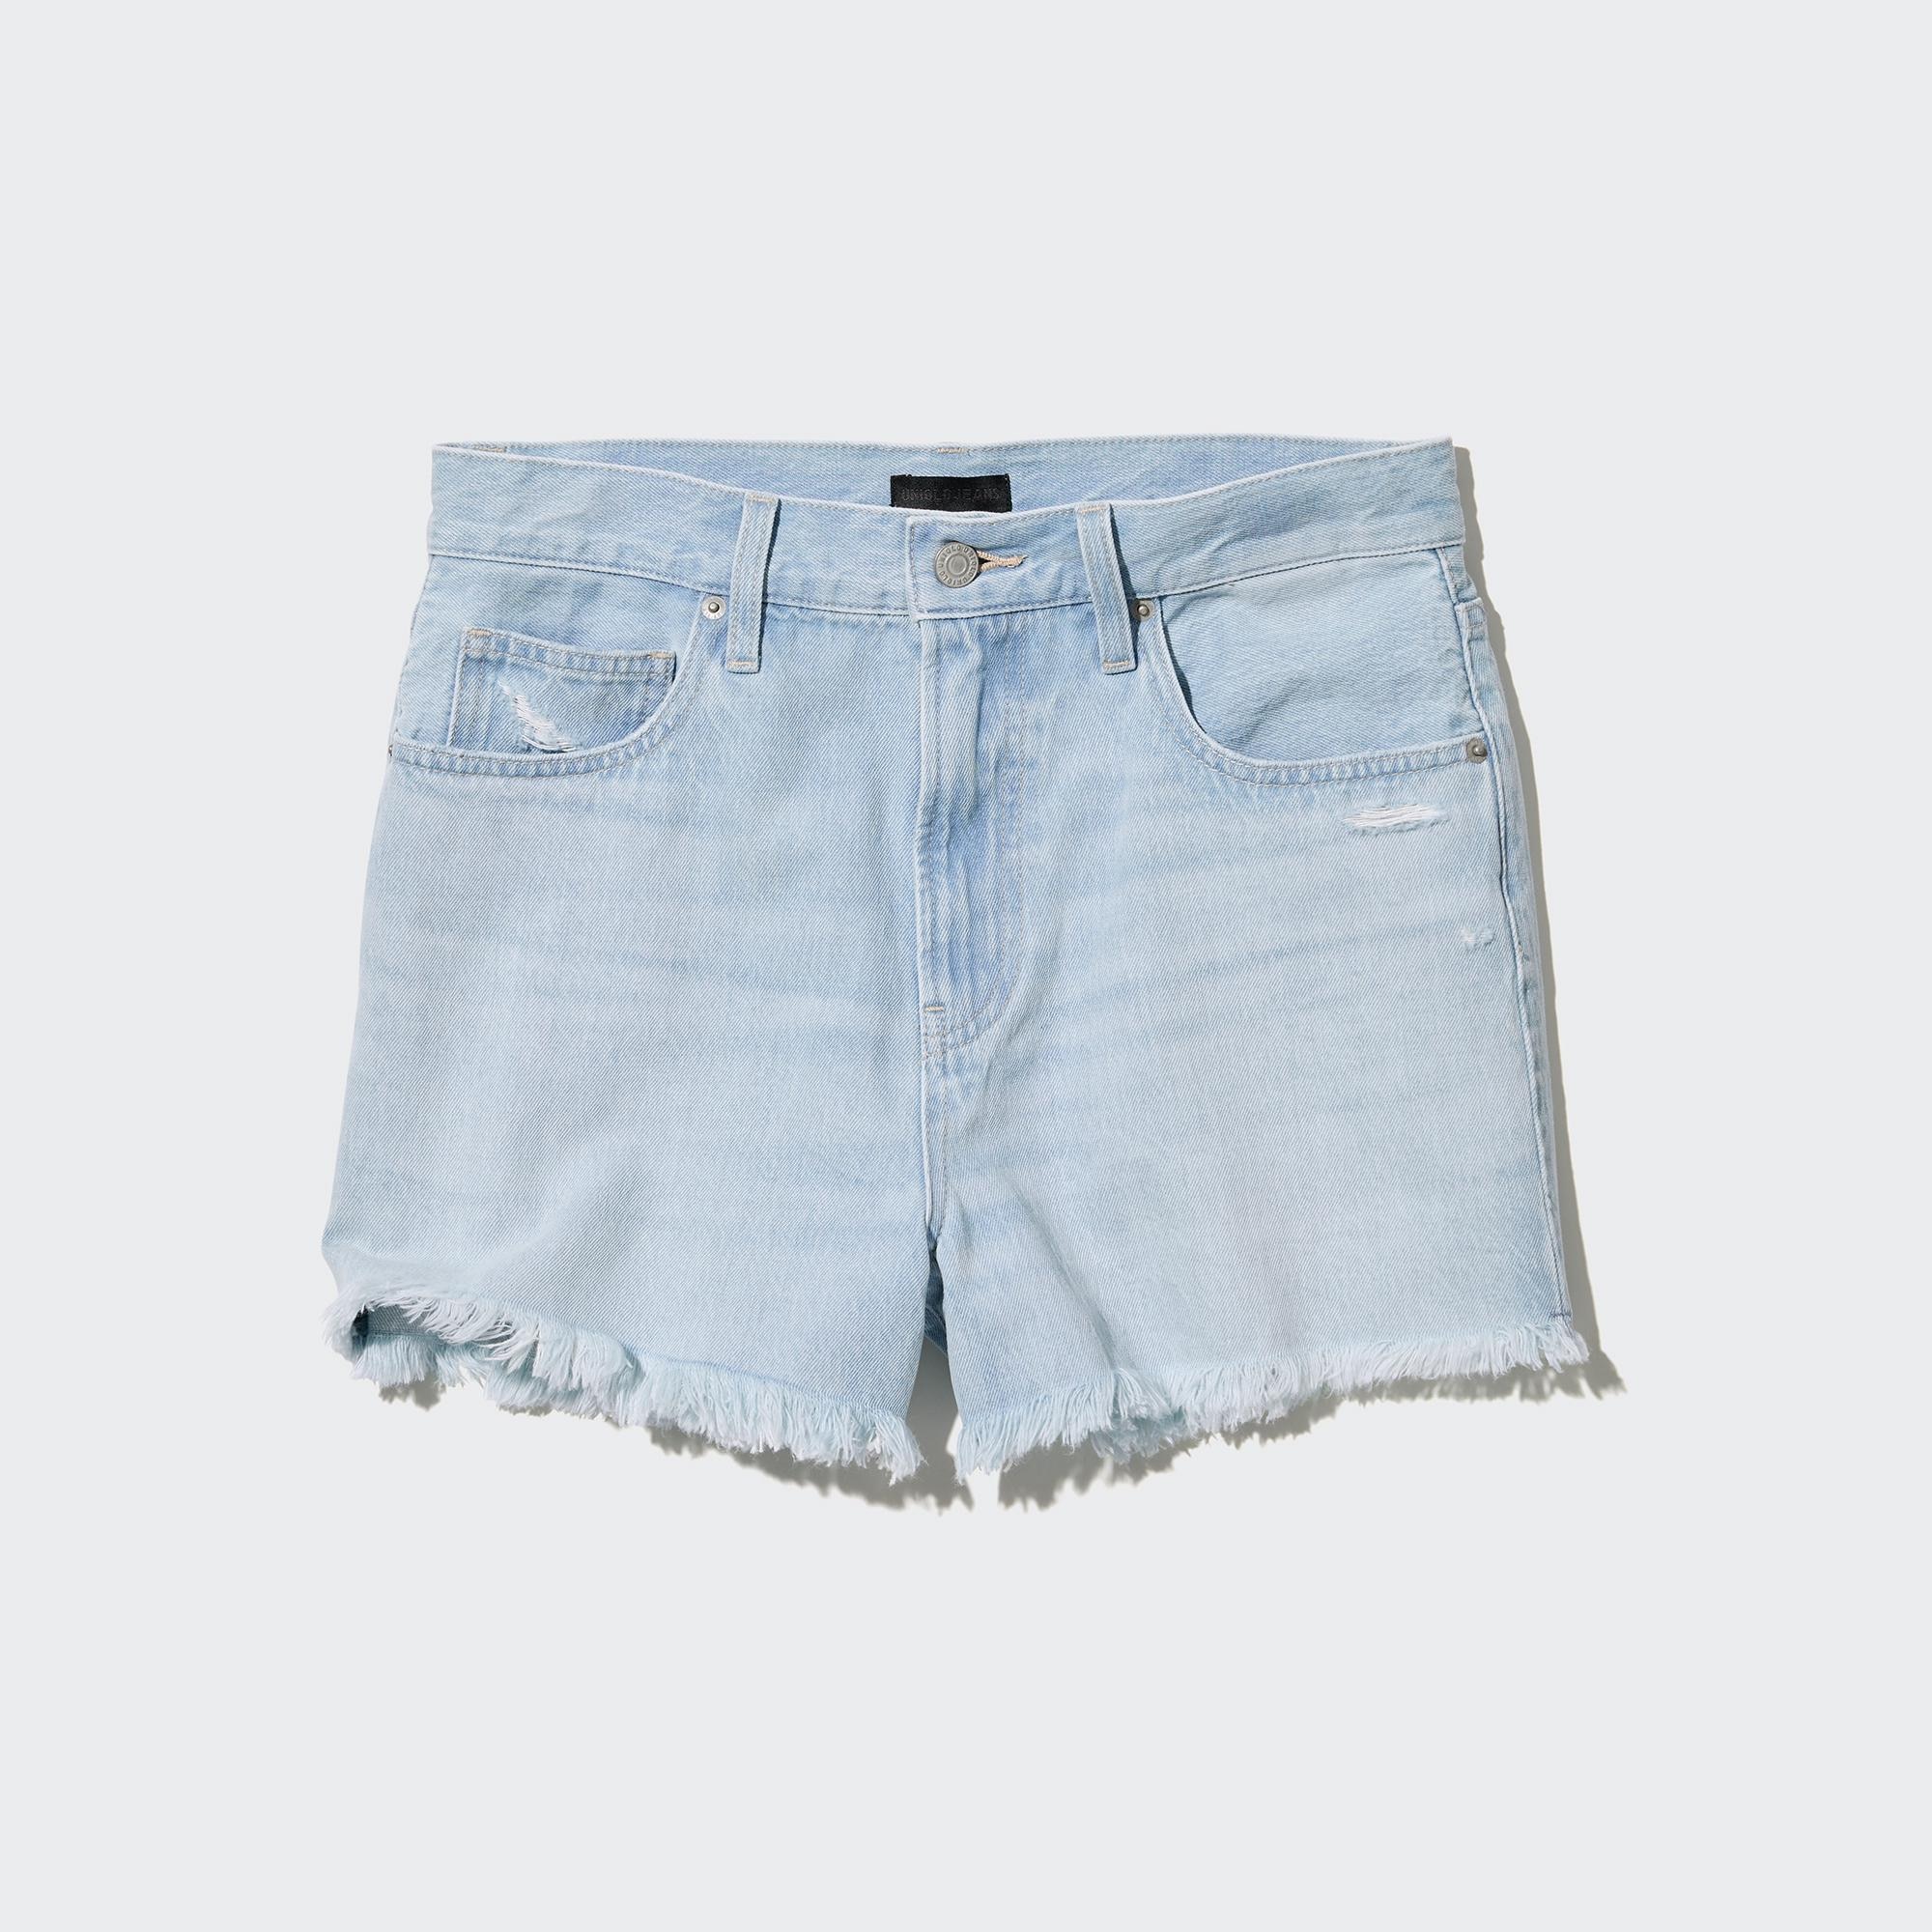 Buy Pepe Jeans Light Blue Denim Shorts for Women's Online @ Tata CLiQ